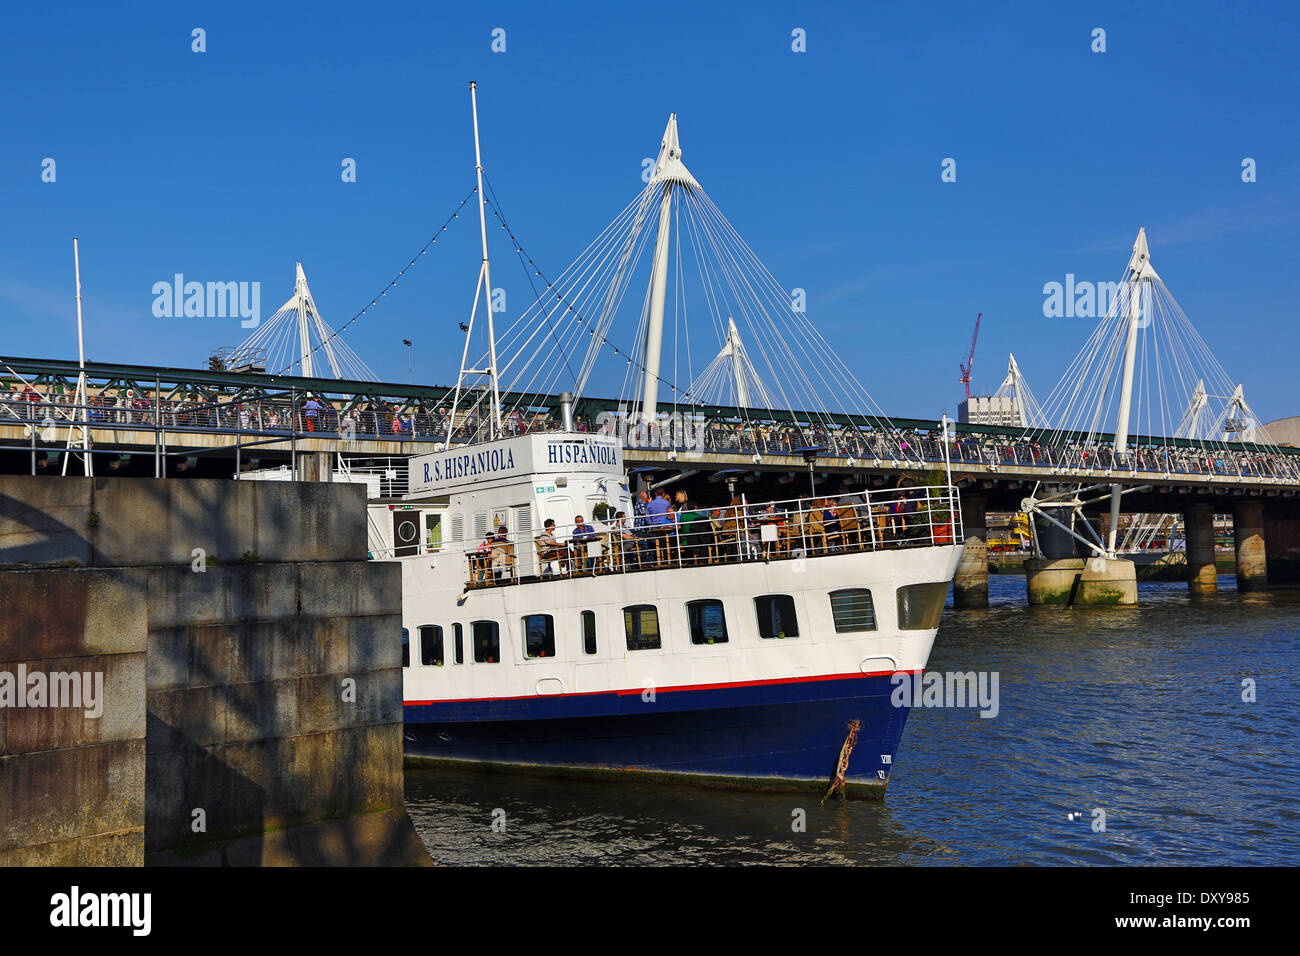 R.S Hispaniola restaurant ship on the River Thames in London, England Stock Photo